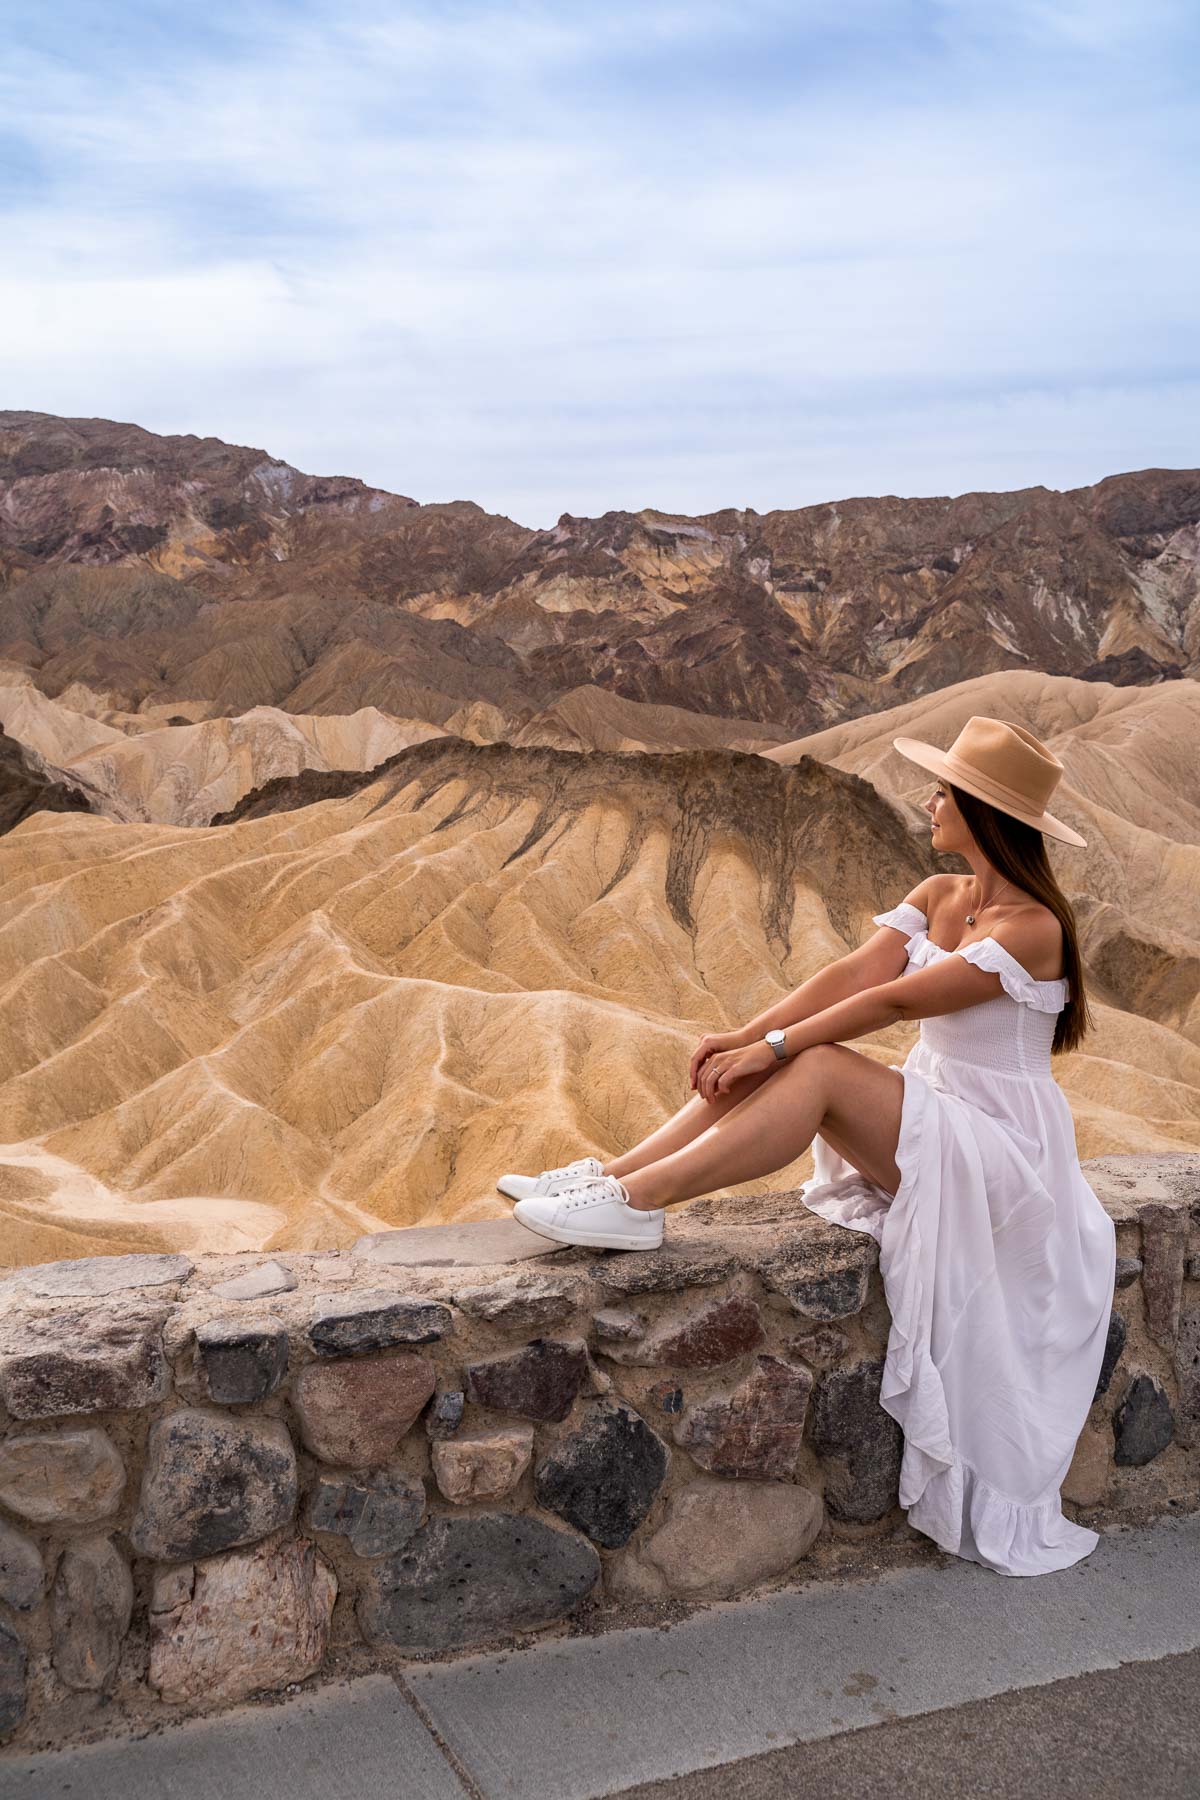 Girl in white dress sitting at Zabriskie Point in Death Valley National Park